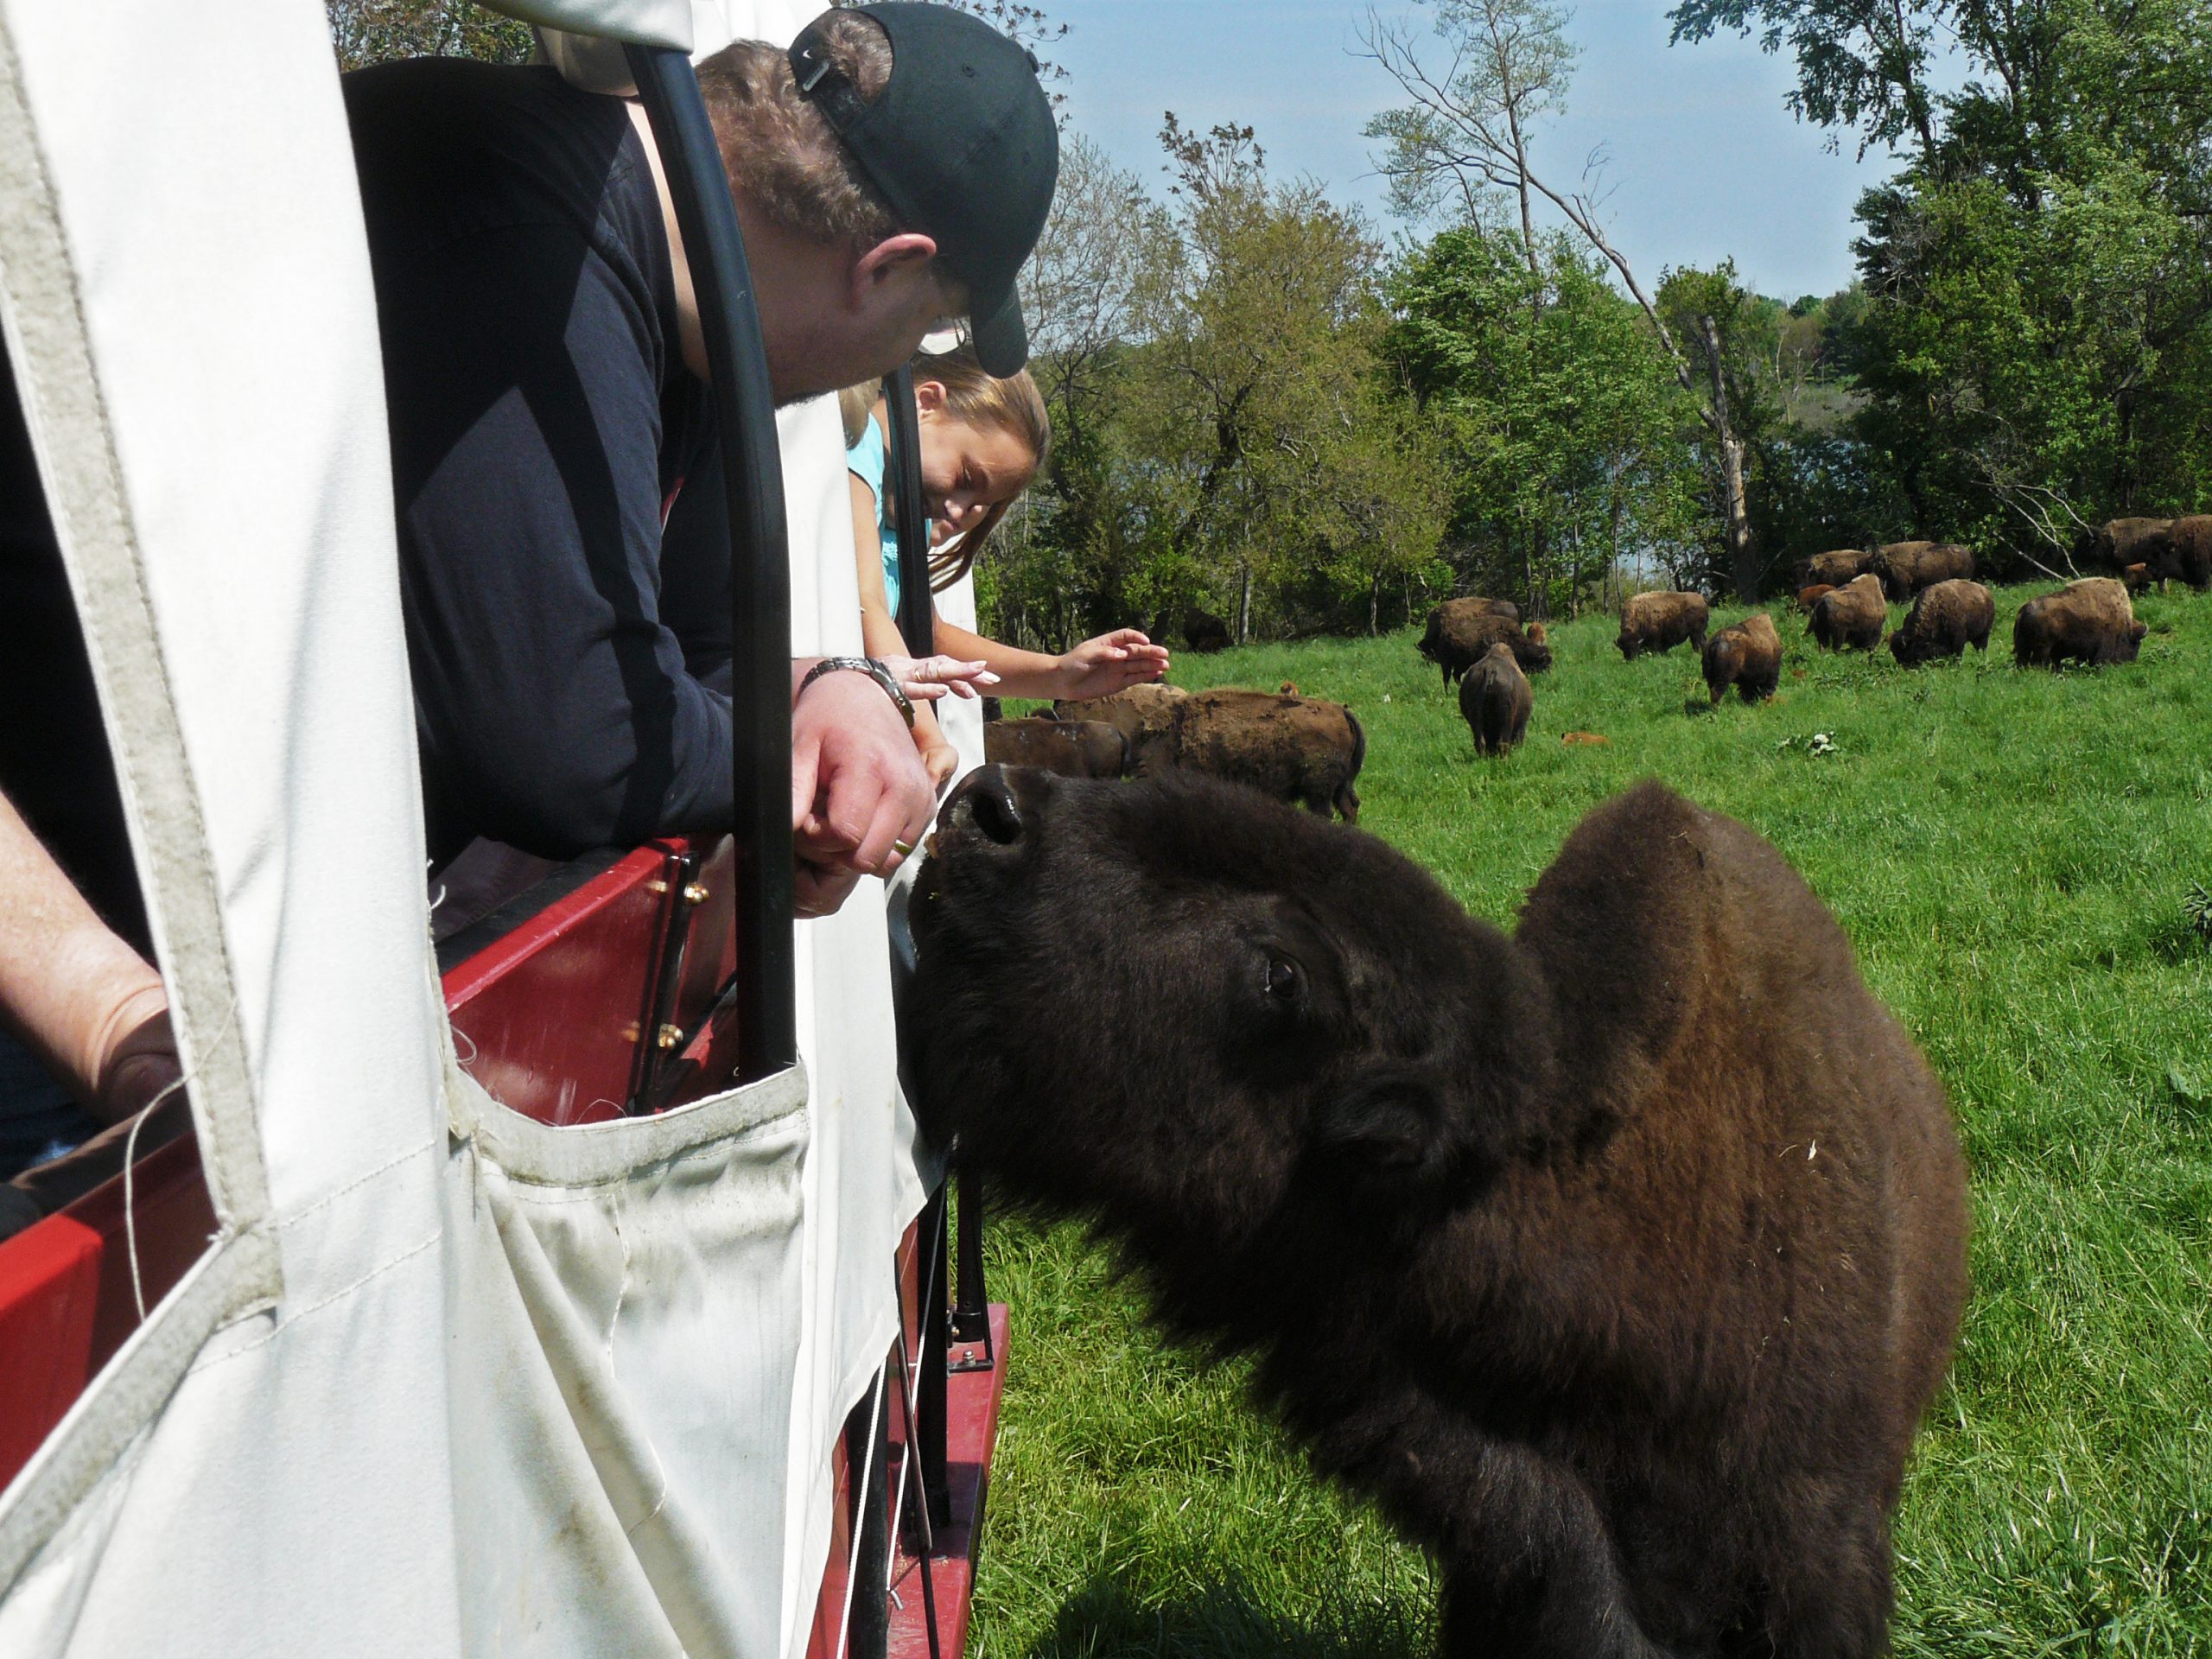 People feeding an American bison